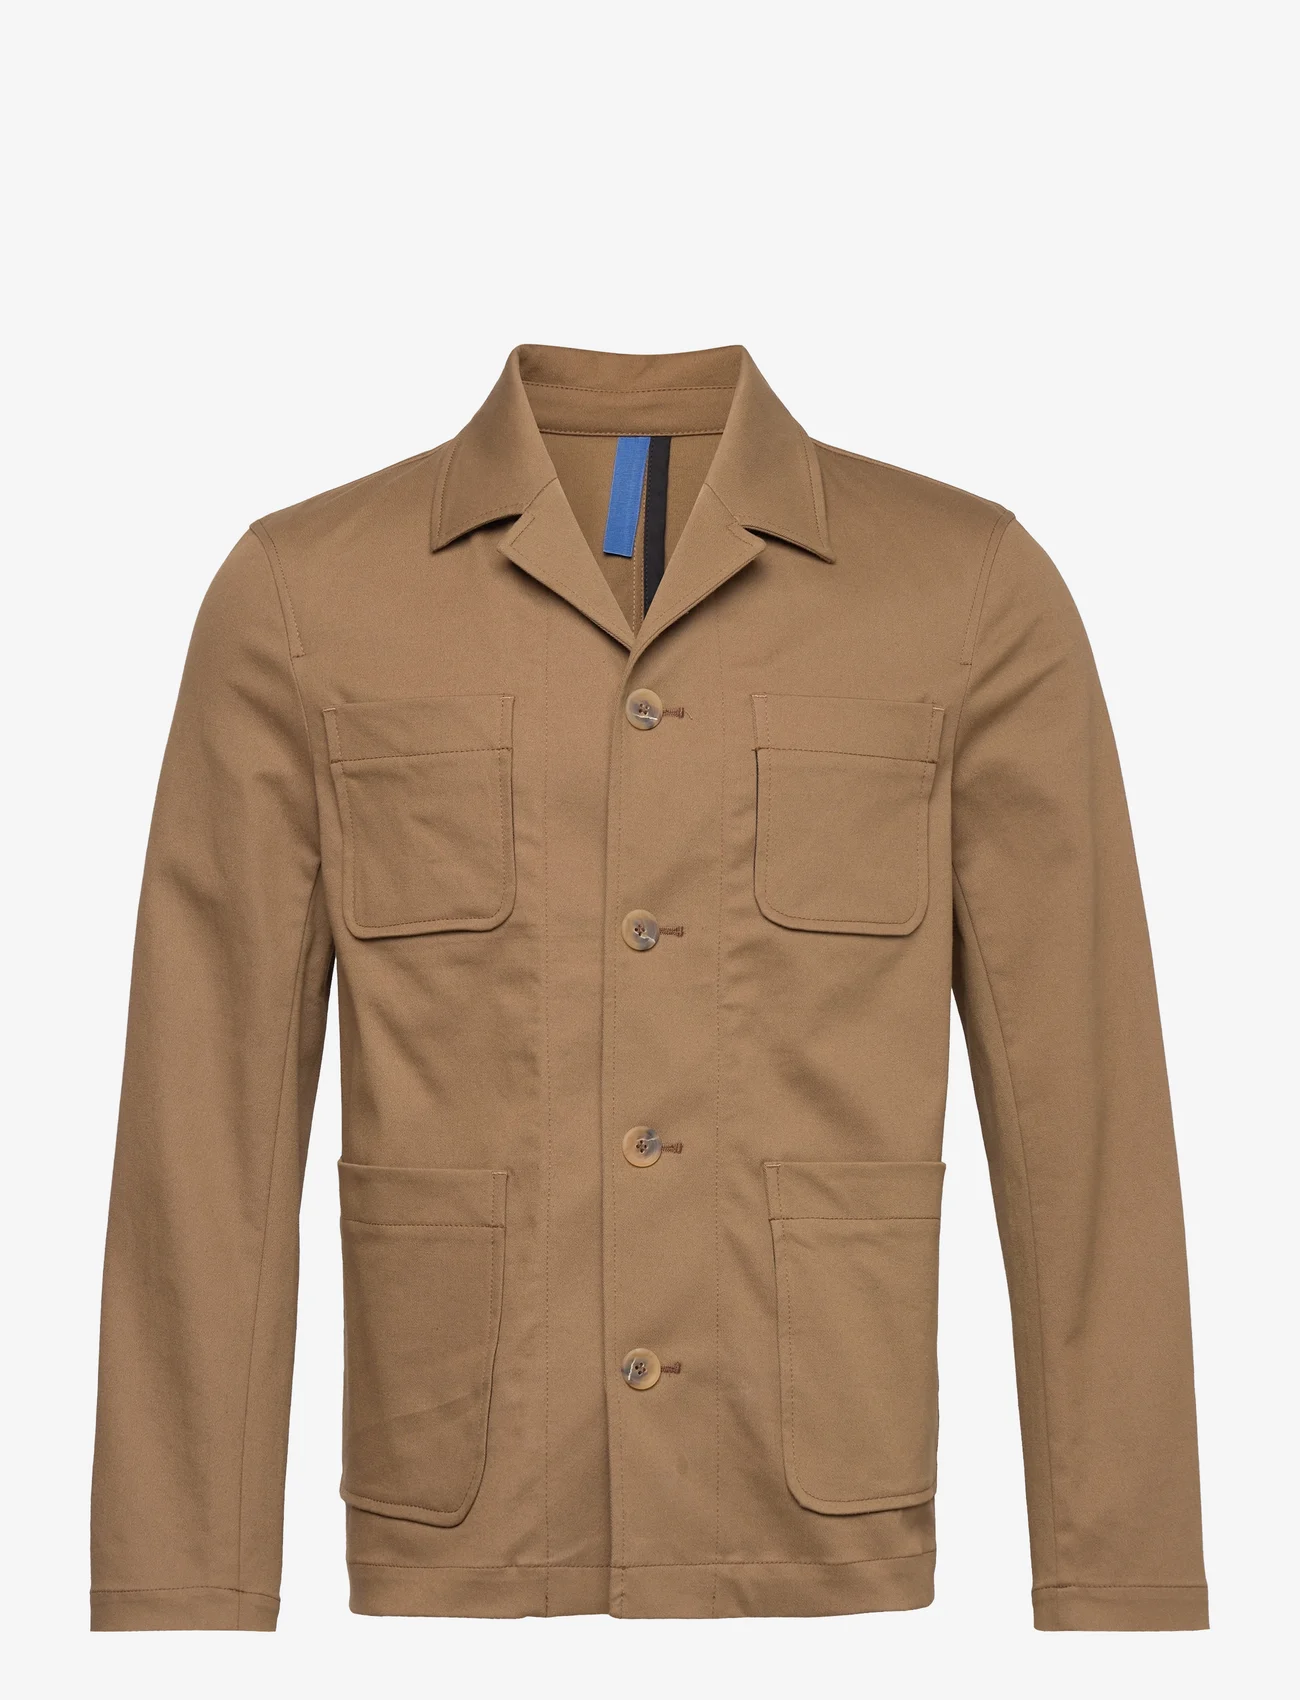 FRENN - Jarmo organic cotton jacket - pavasara jakas - brown - 0